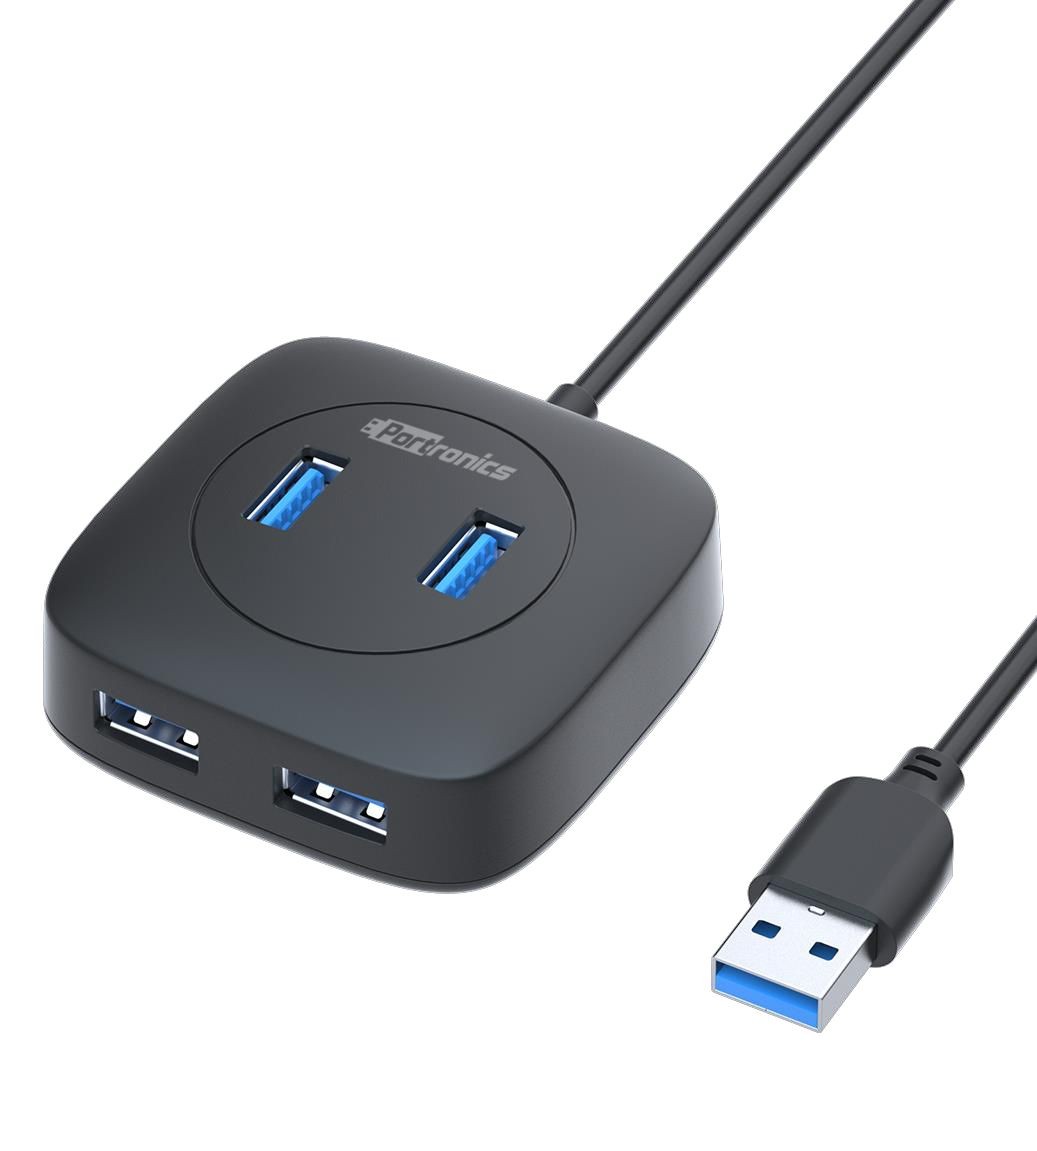 Portronics Mport 4A POR-1159 4-Port USB Hub High Speed (Black)